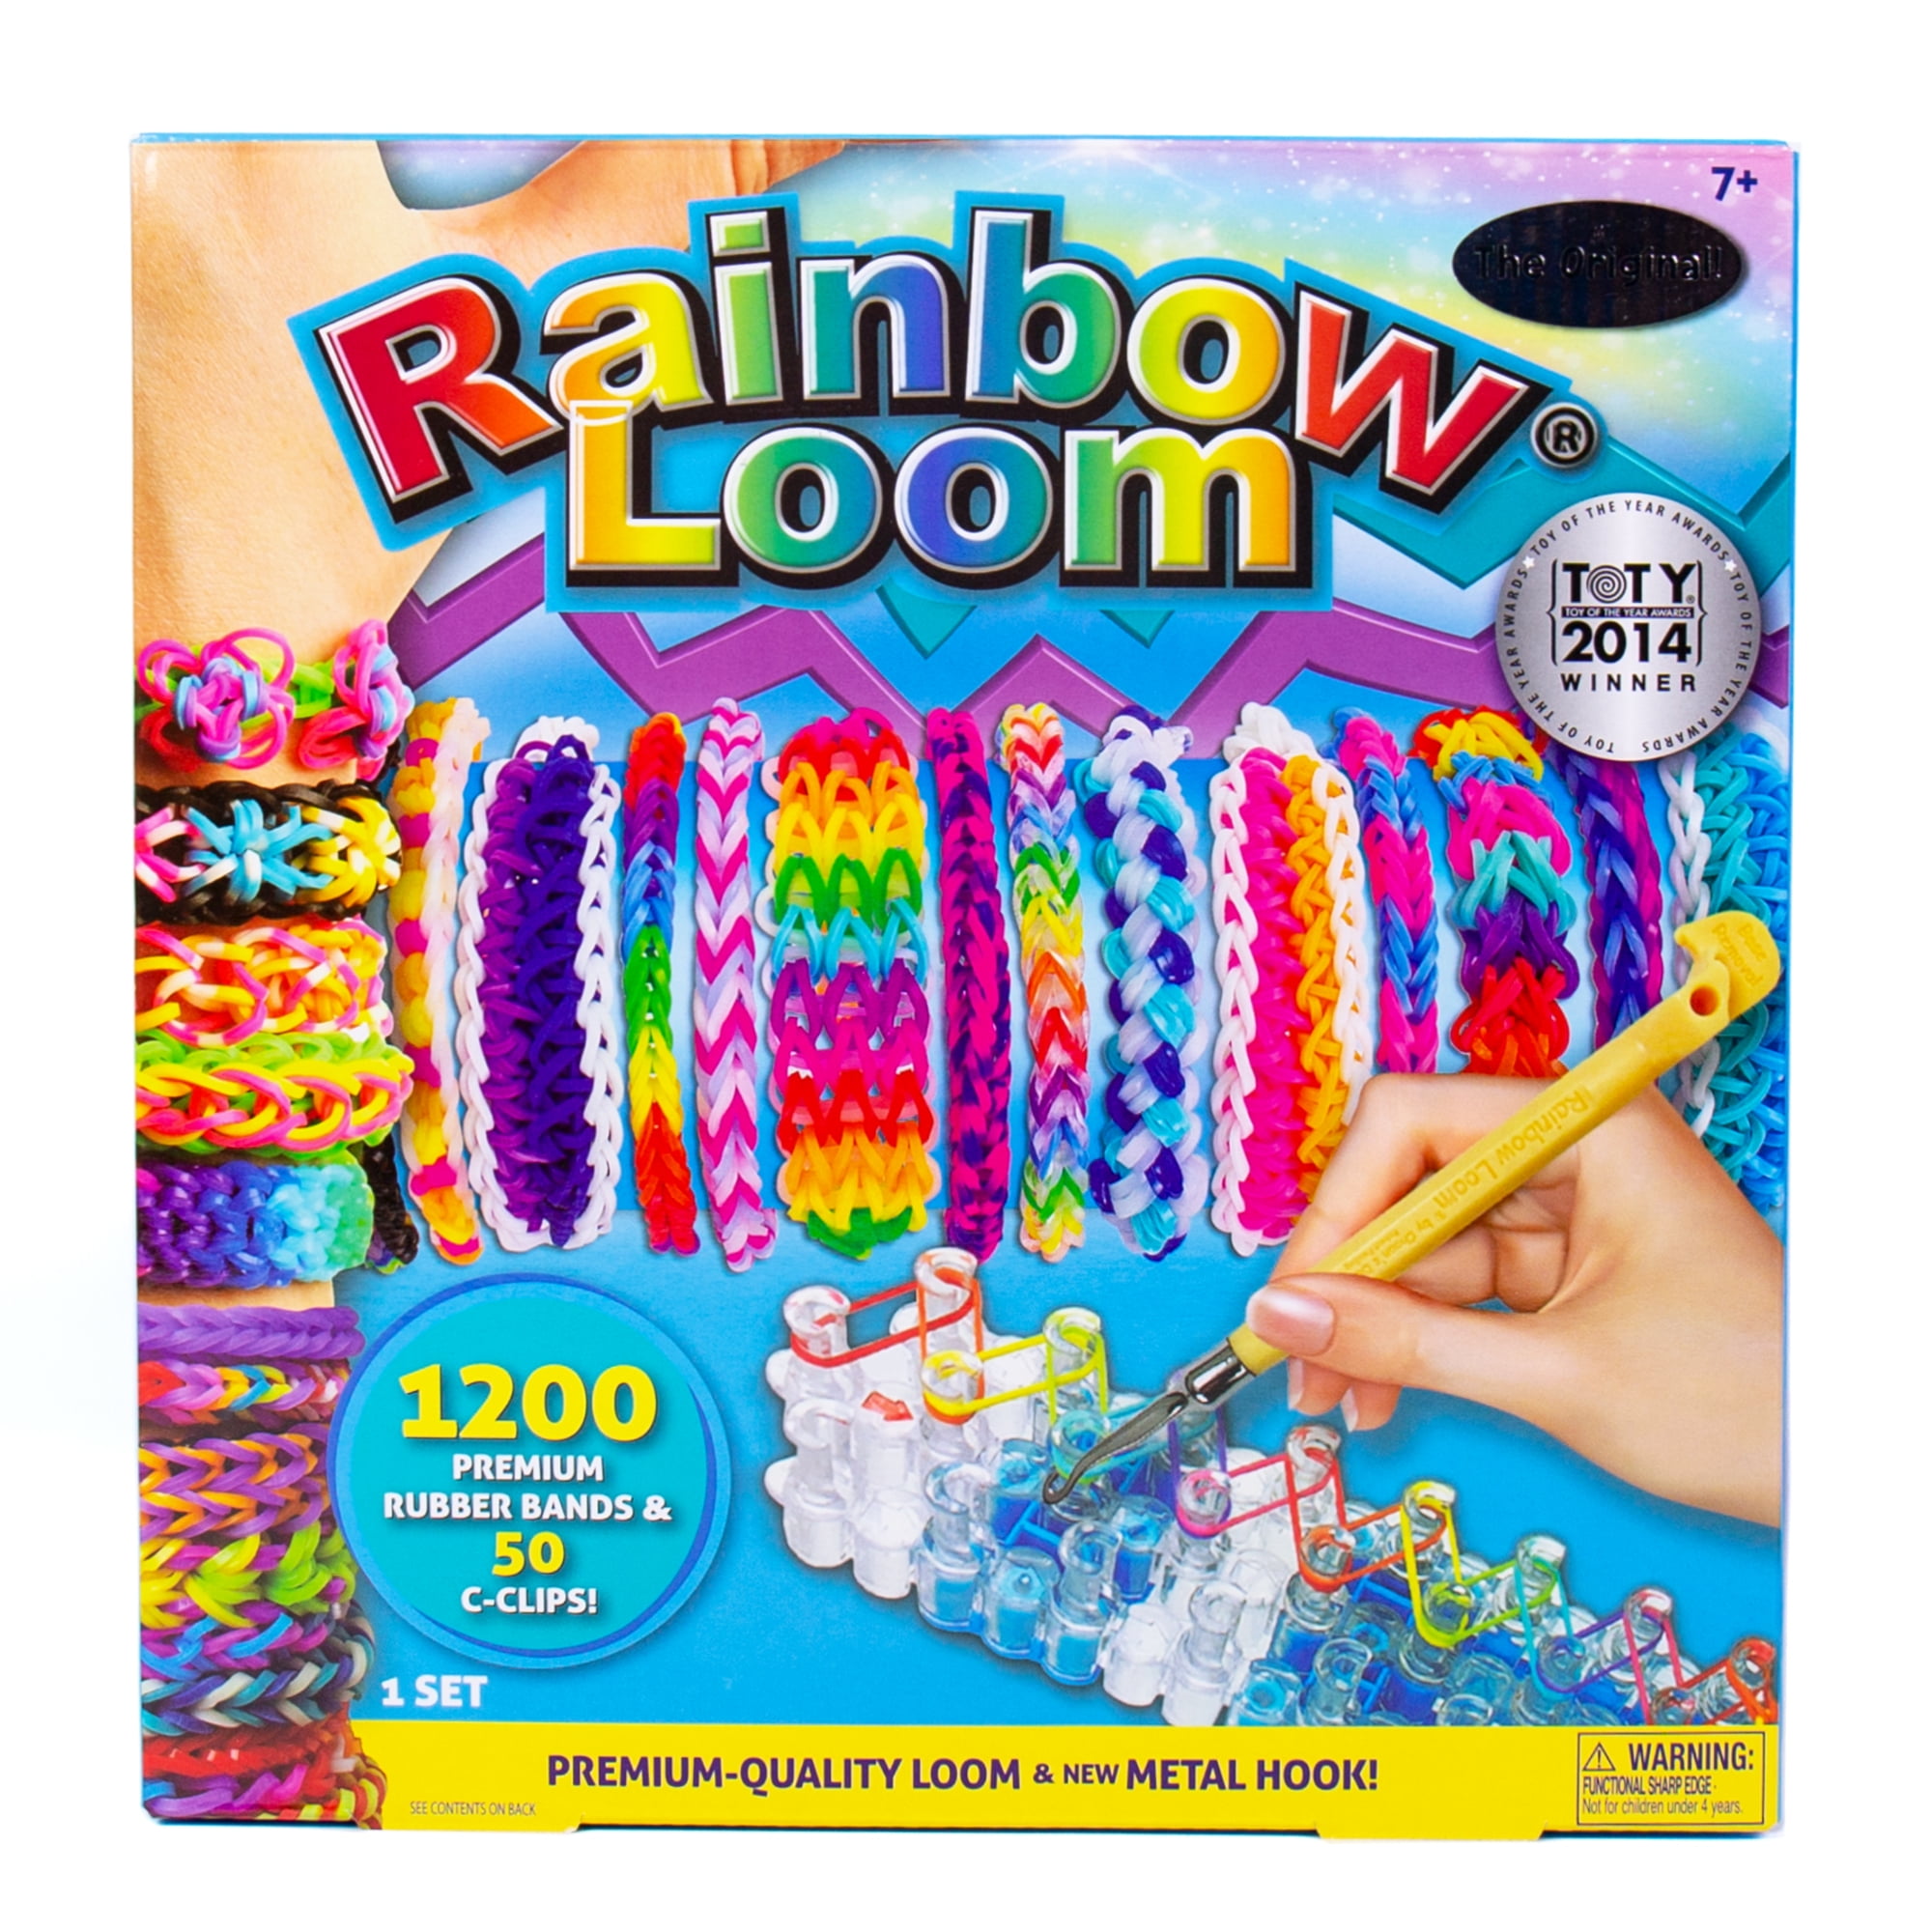 SALE New Rainbow Rubberband Loom Kit 600 Bands Tool 24 Hooks Kids Birthday Gift 